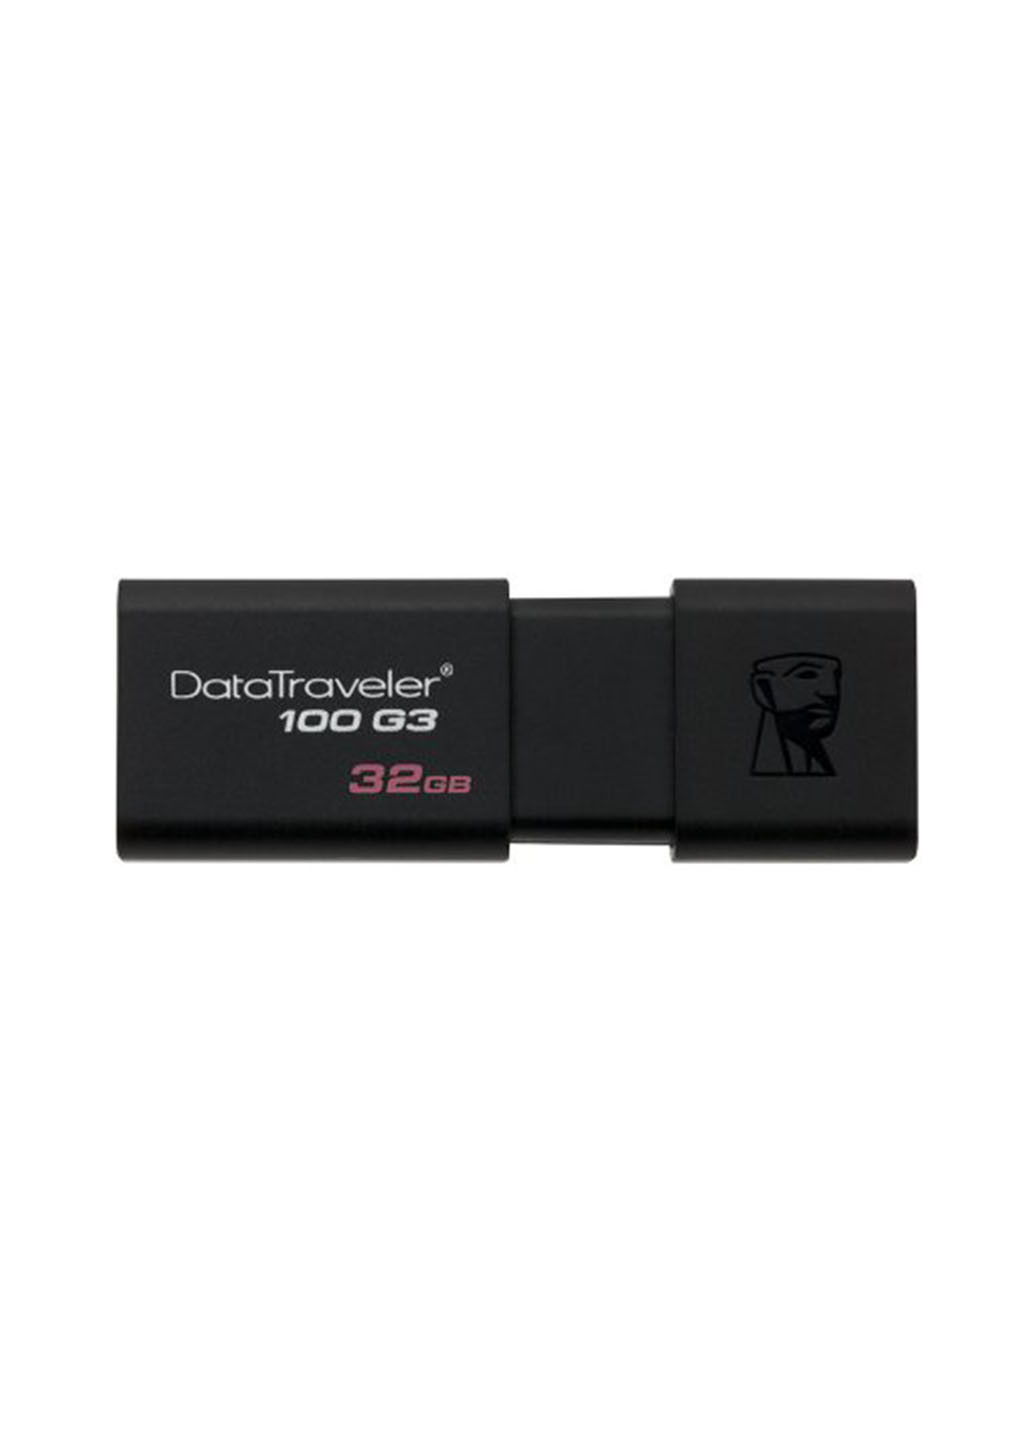 Флеш пам'ять USB DataTraveler 100 G3 32GB USB 3.0 (DT100G3 / 32GB) Kingston флеш память usb kingston datatraveler 100 g3 32gb usb 3.0 (dt100g3/32gb) (139256275)